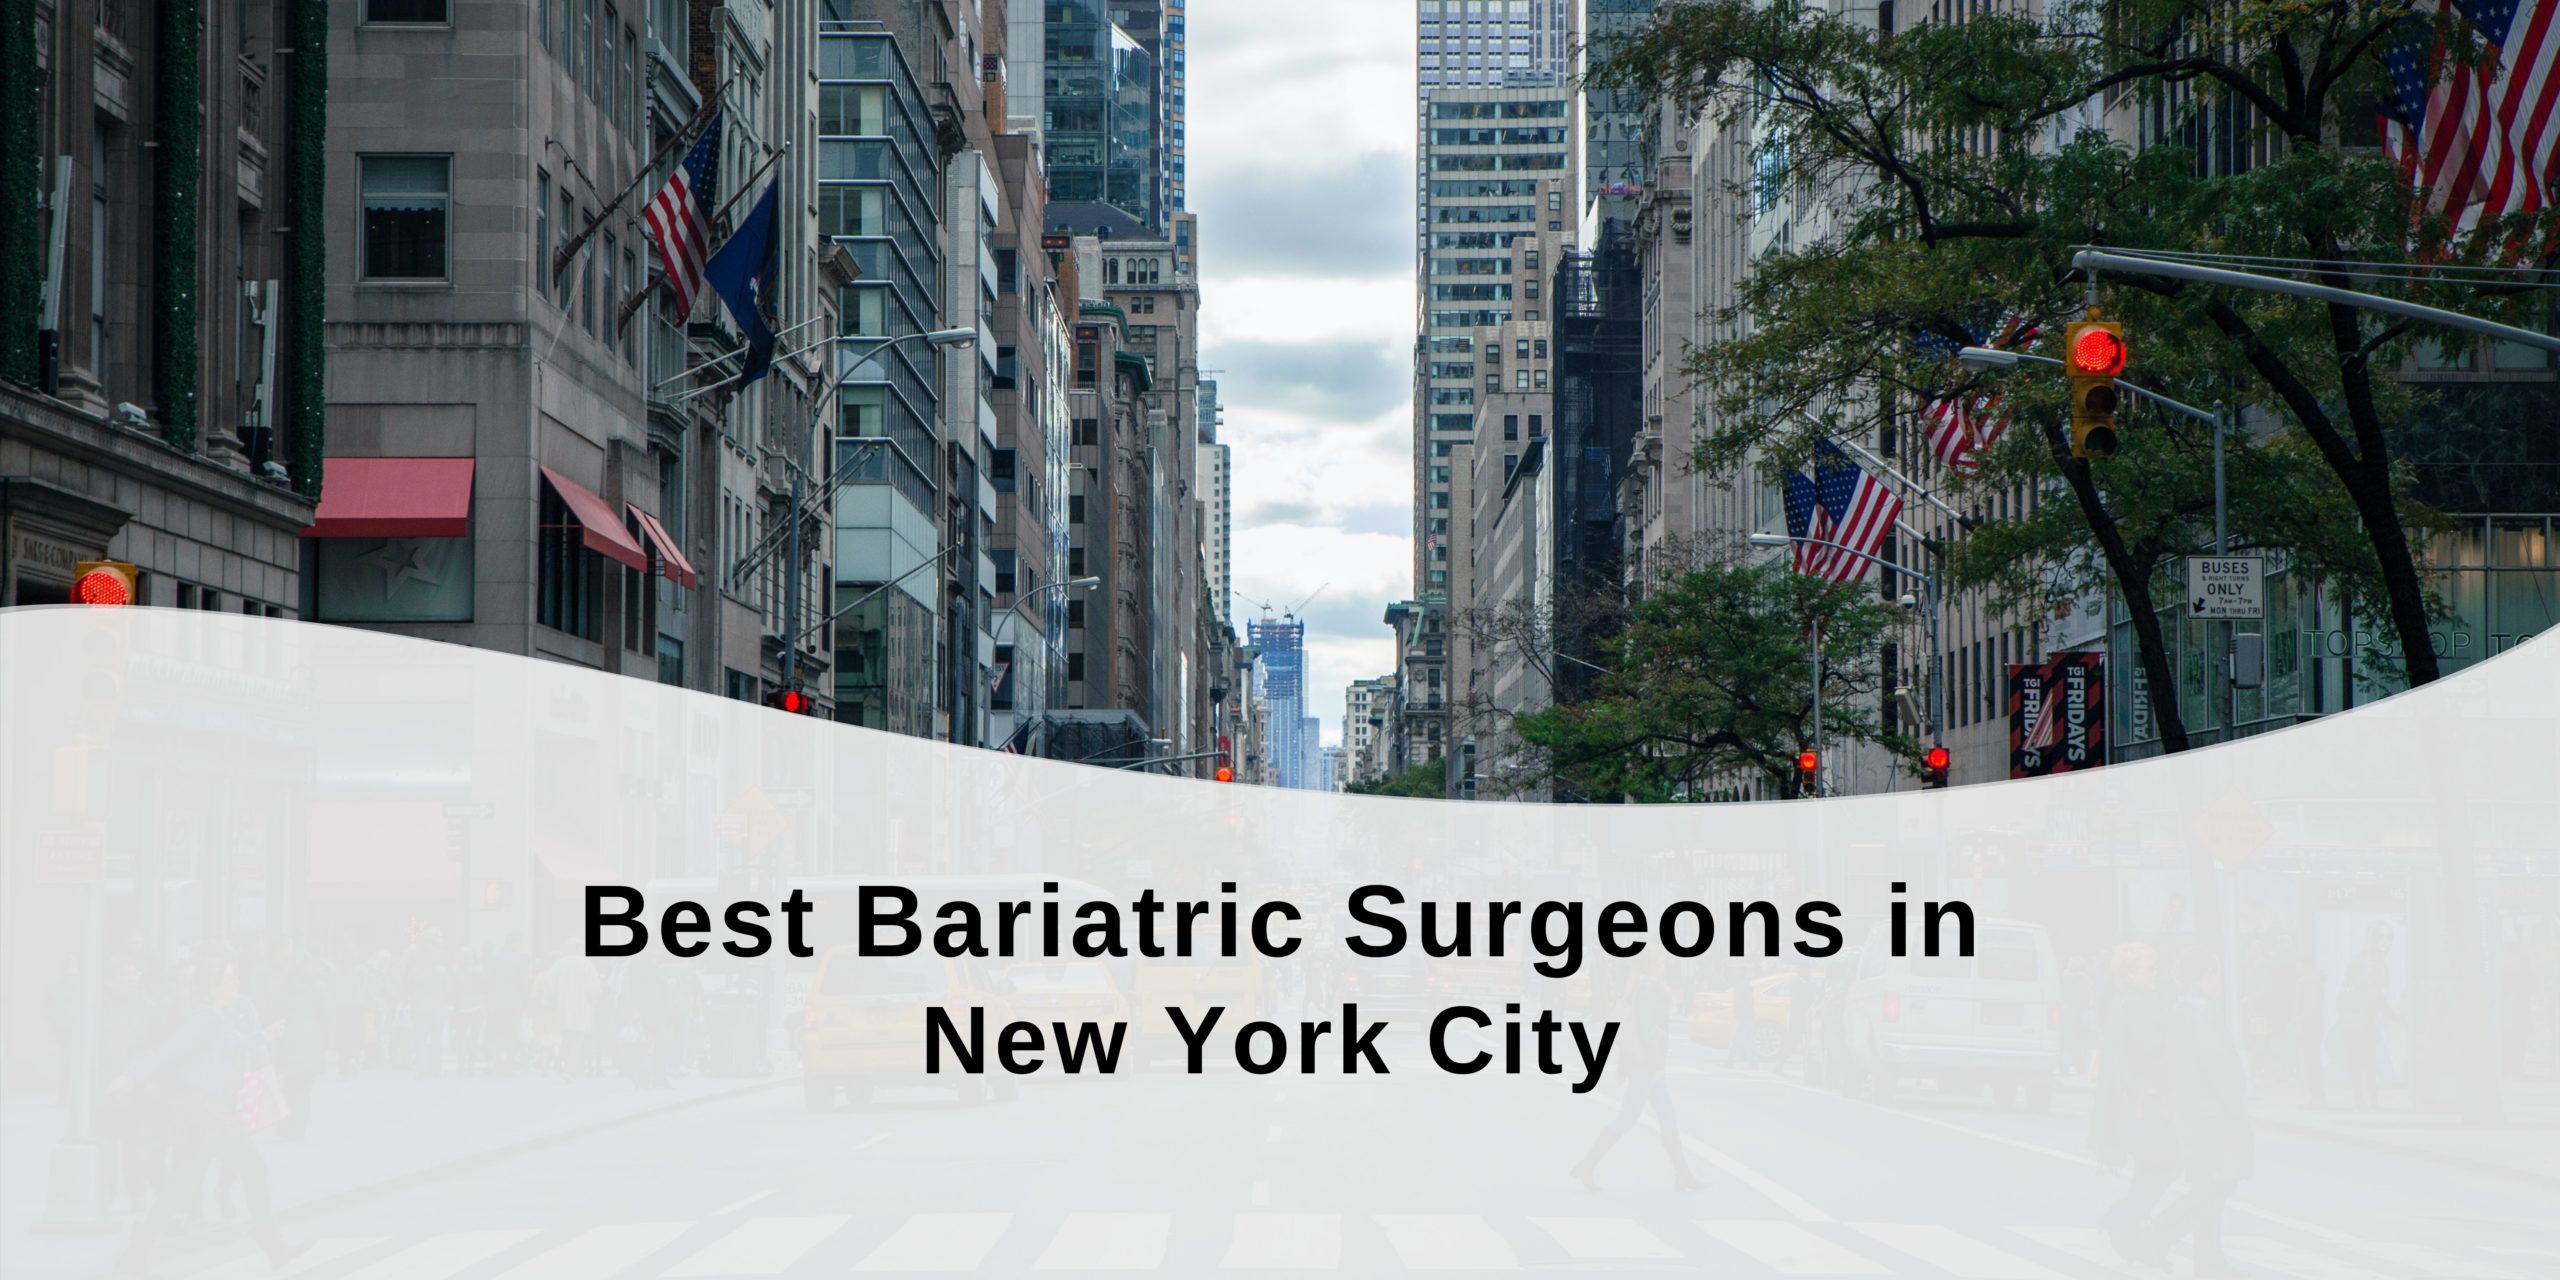 Best Bariatric Surgeons in New York City